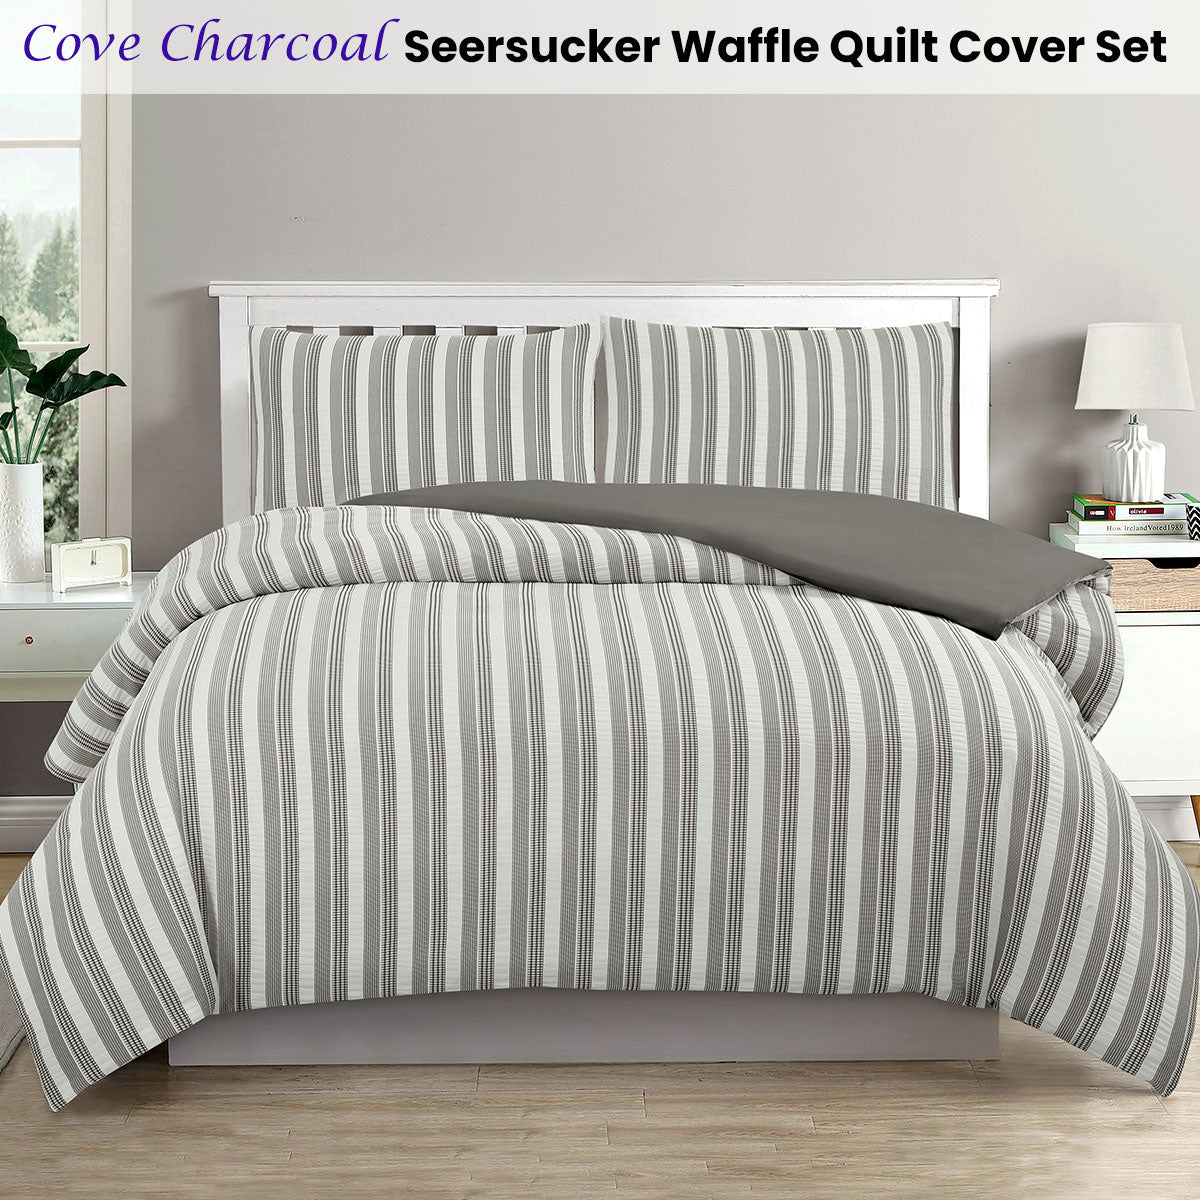 KING Seersucker Waffle Quilt Cover Set - Charcoal